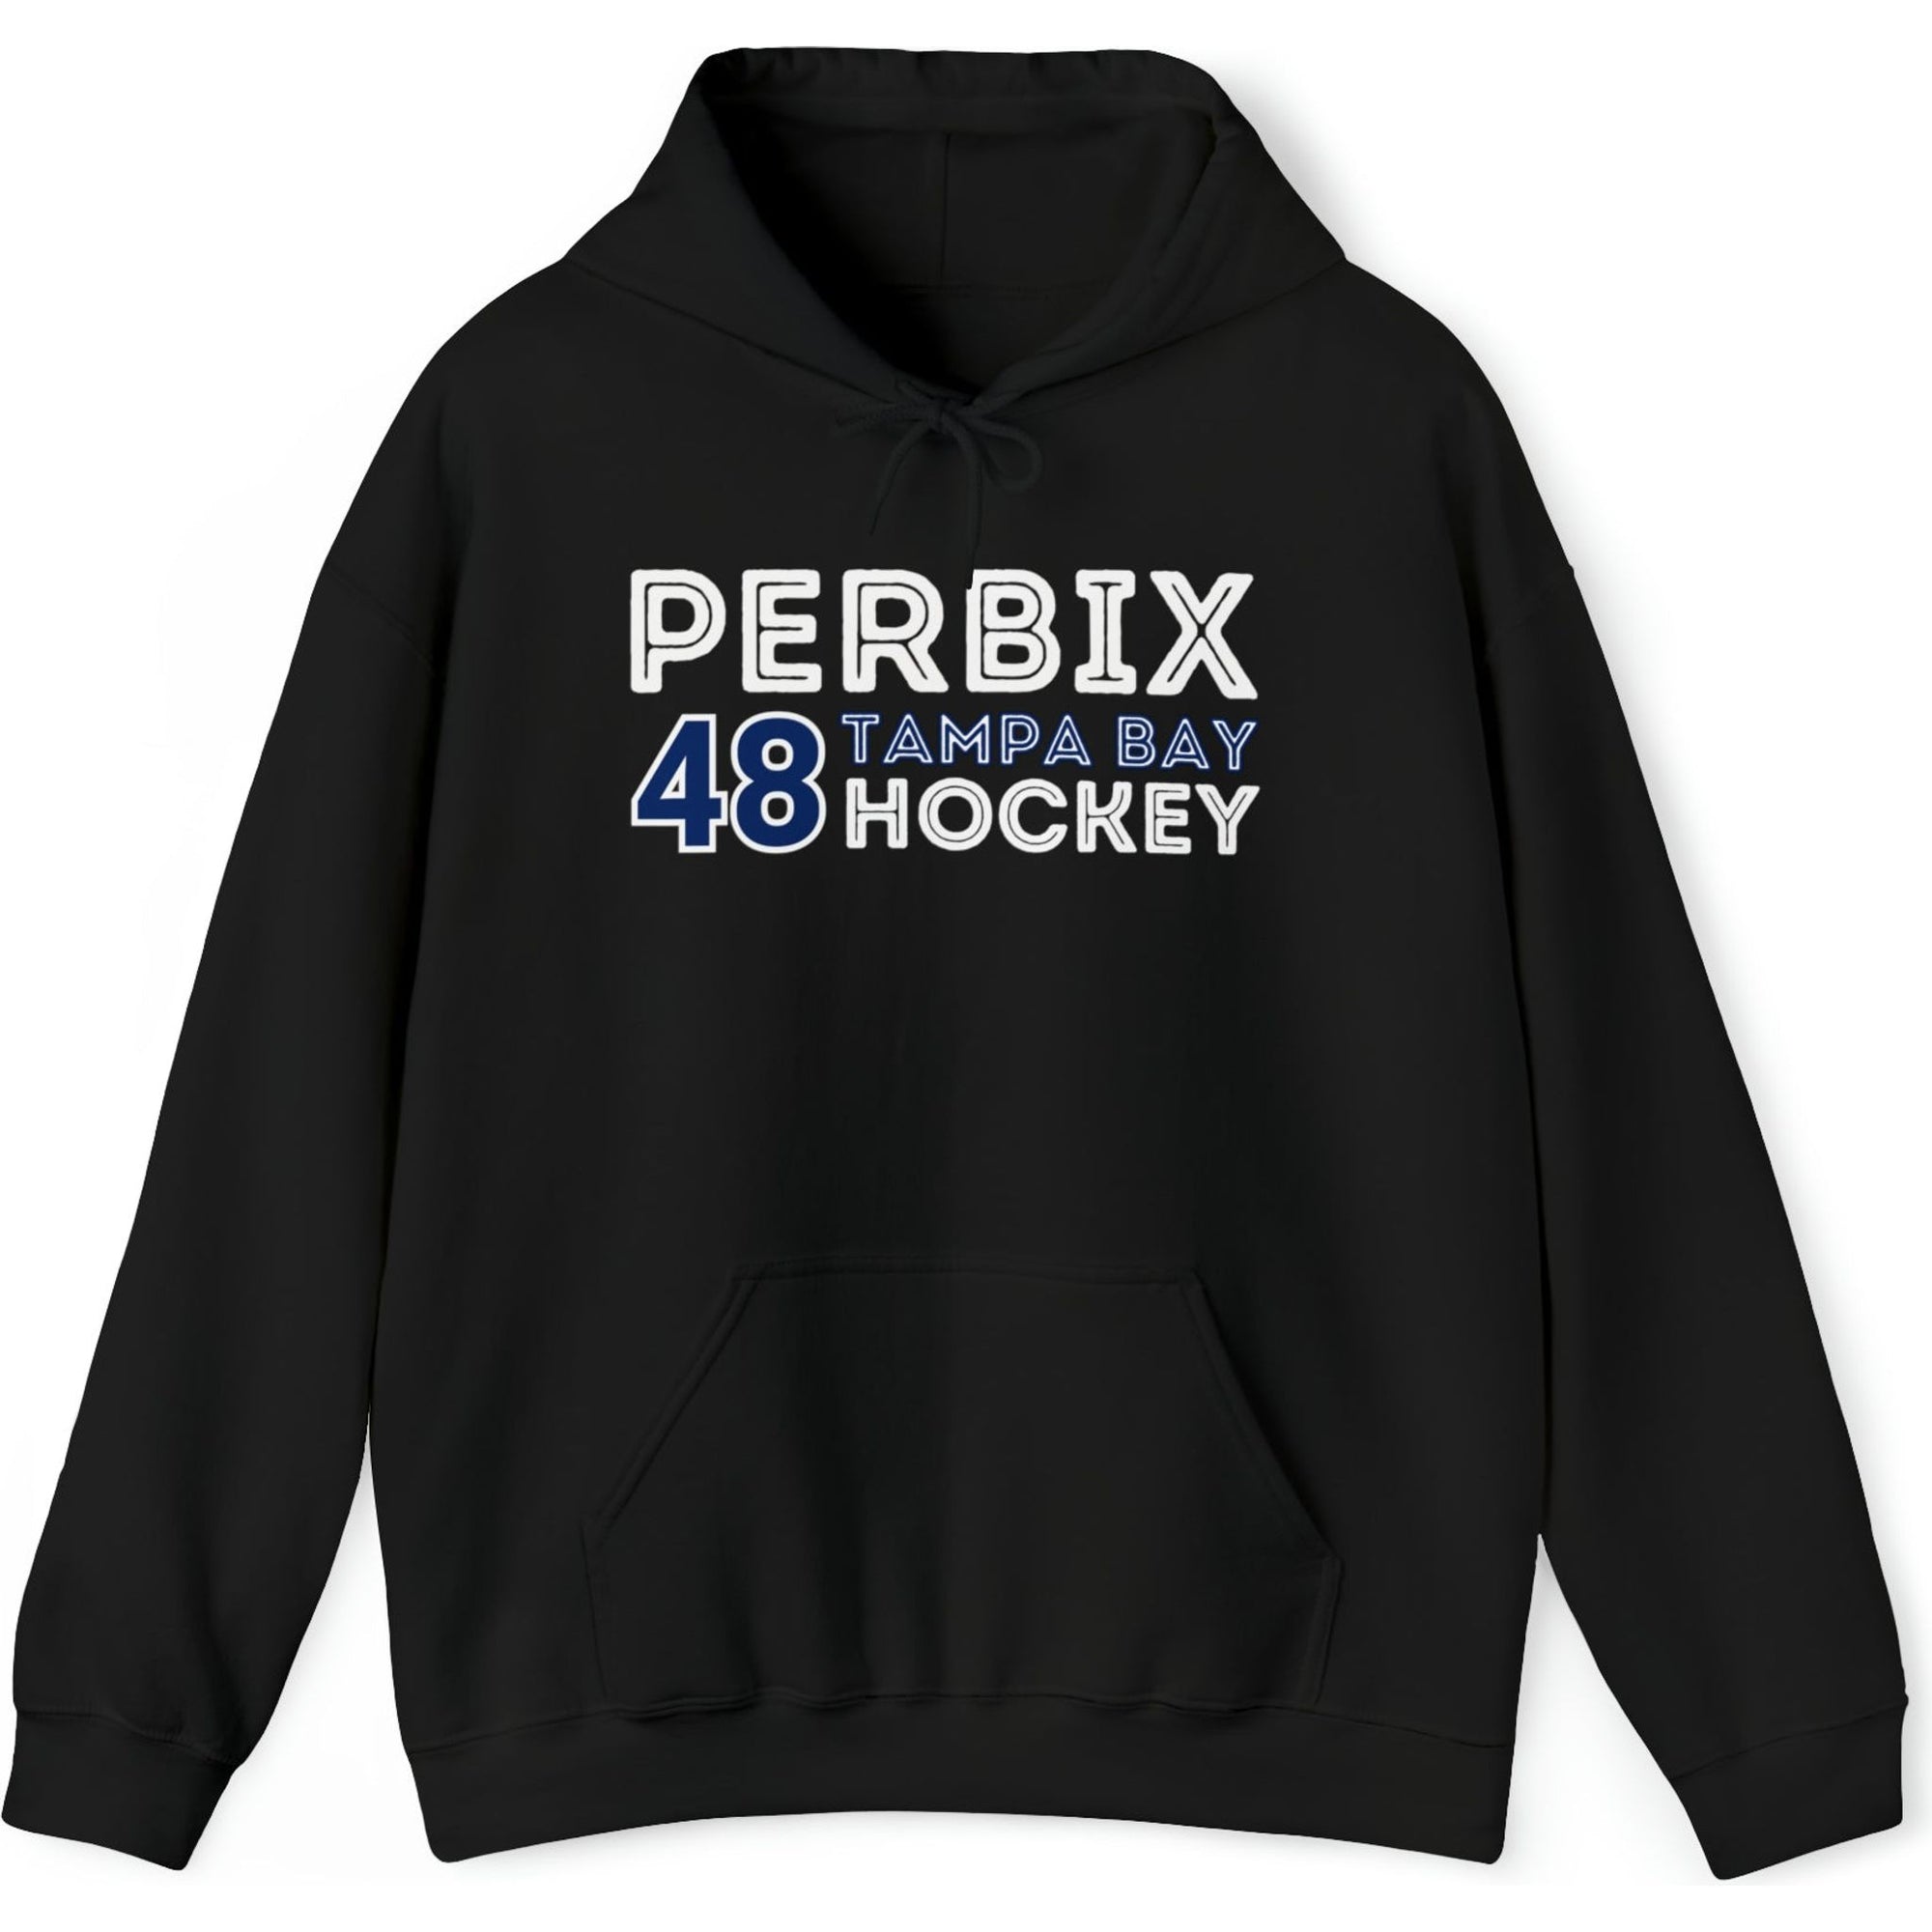 Perbix 48 Tampa Bay Hockey Grafitti Wall Design Unisex Hooded Sweatshirt